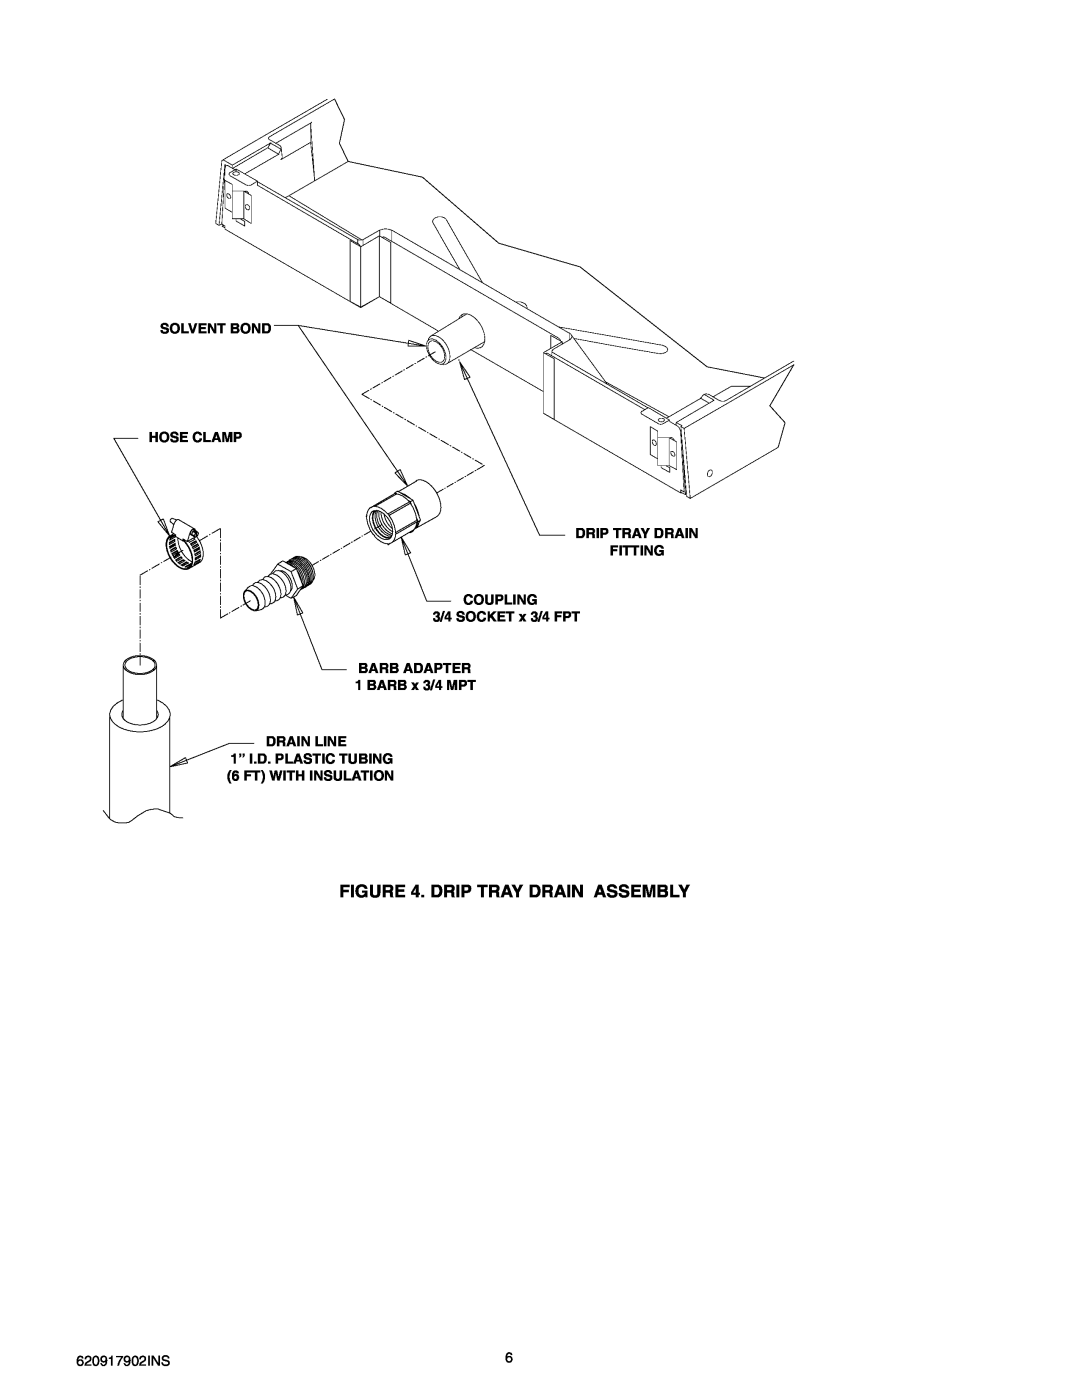 Cornelius ENDURO-175 installation manual Drip Tray Drain Assembly, Solvent Bond Hose Clamp Drip Tray Drain Fitting 